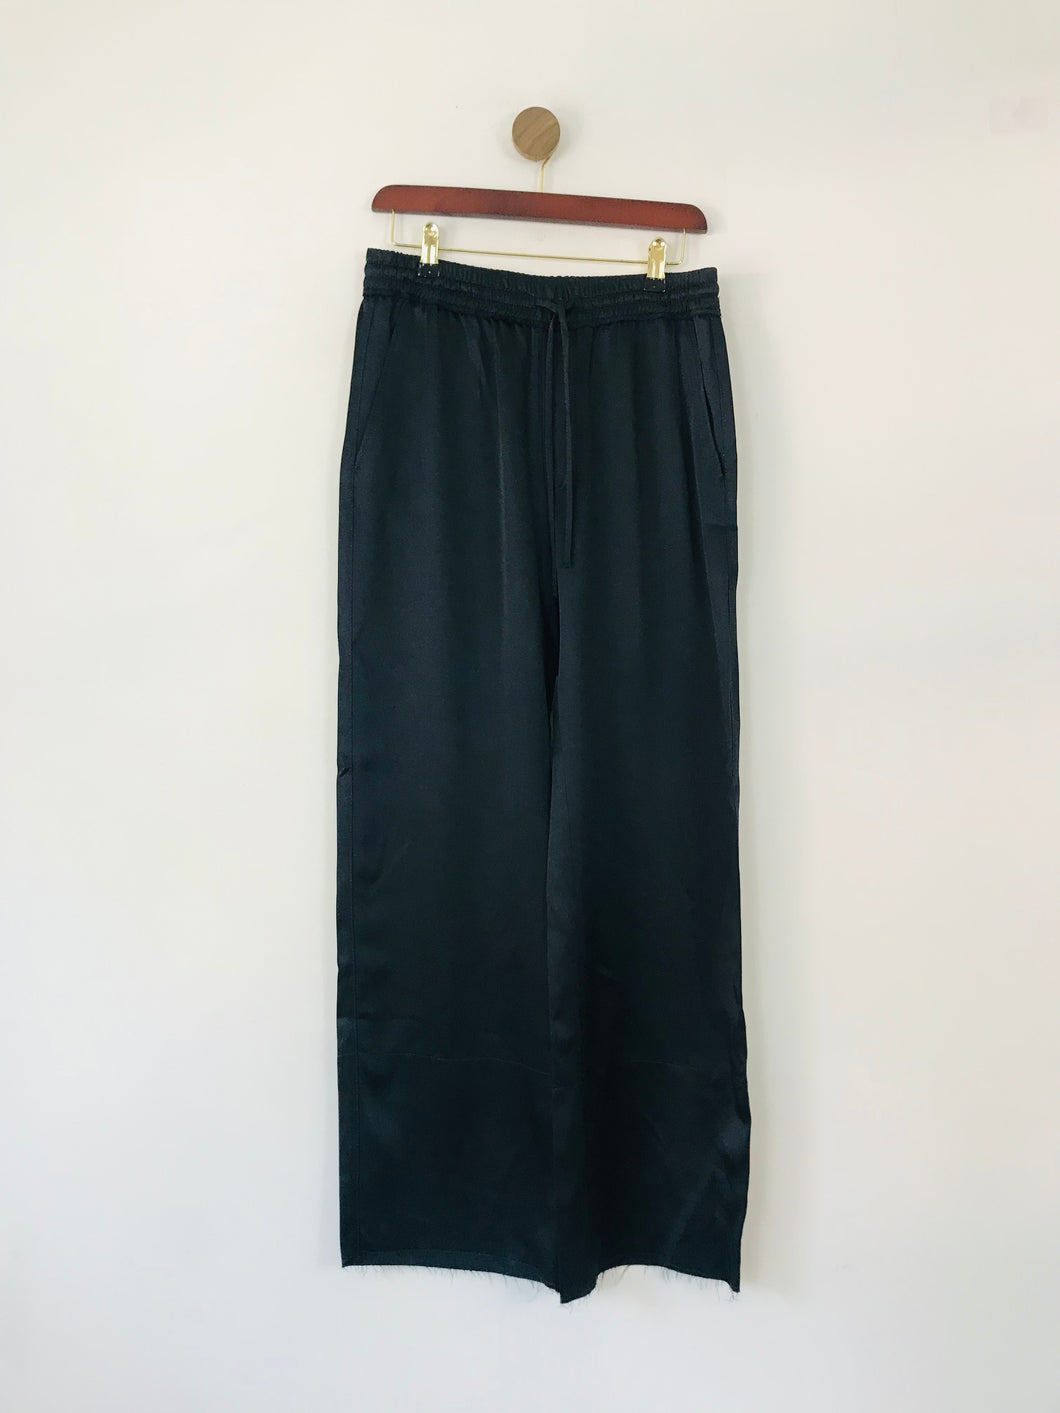 Zara Women's Wide Leg Culottes Trousers | M UK10-12 | Black